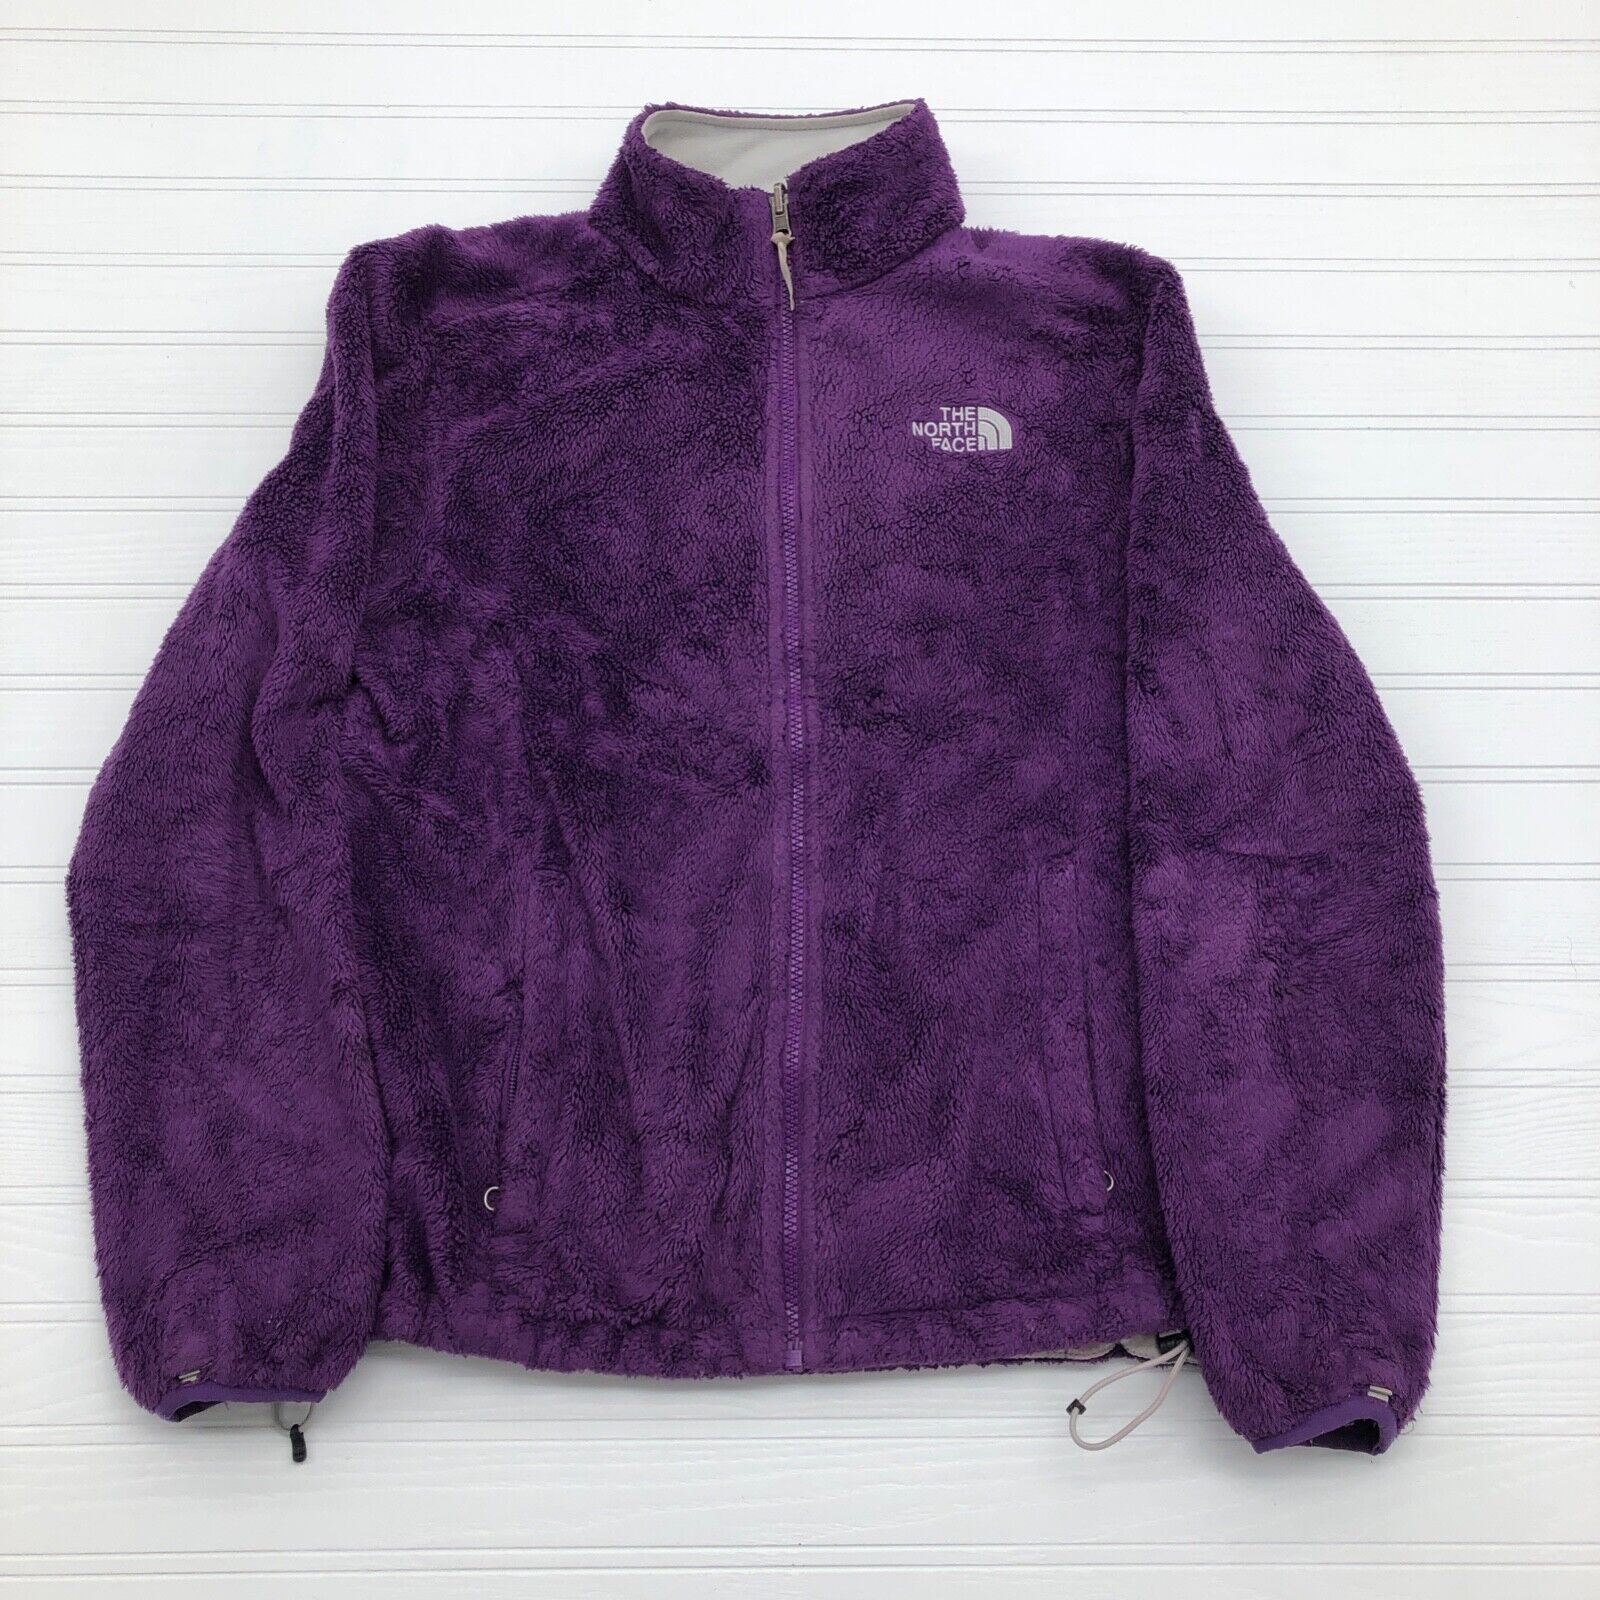 The North Face Purple Fuzzy Fleece Zip-Up Jacket Womens Size 